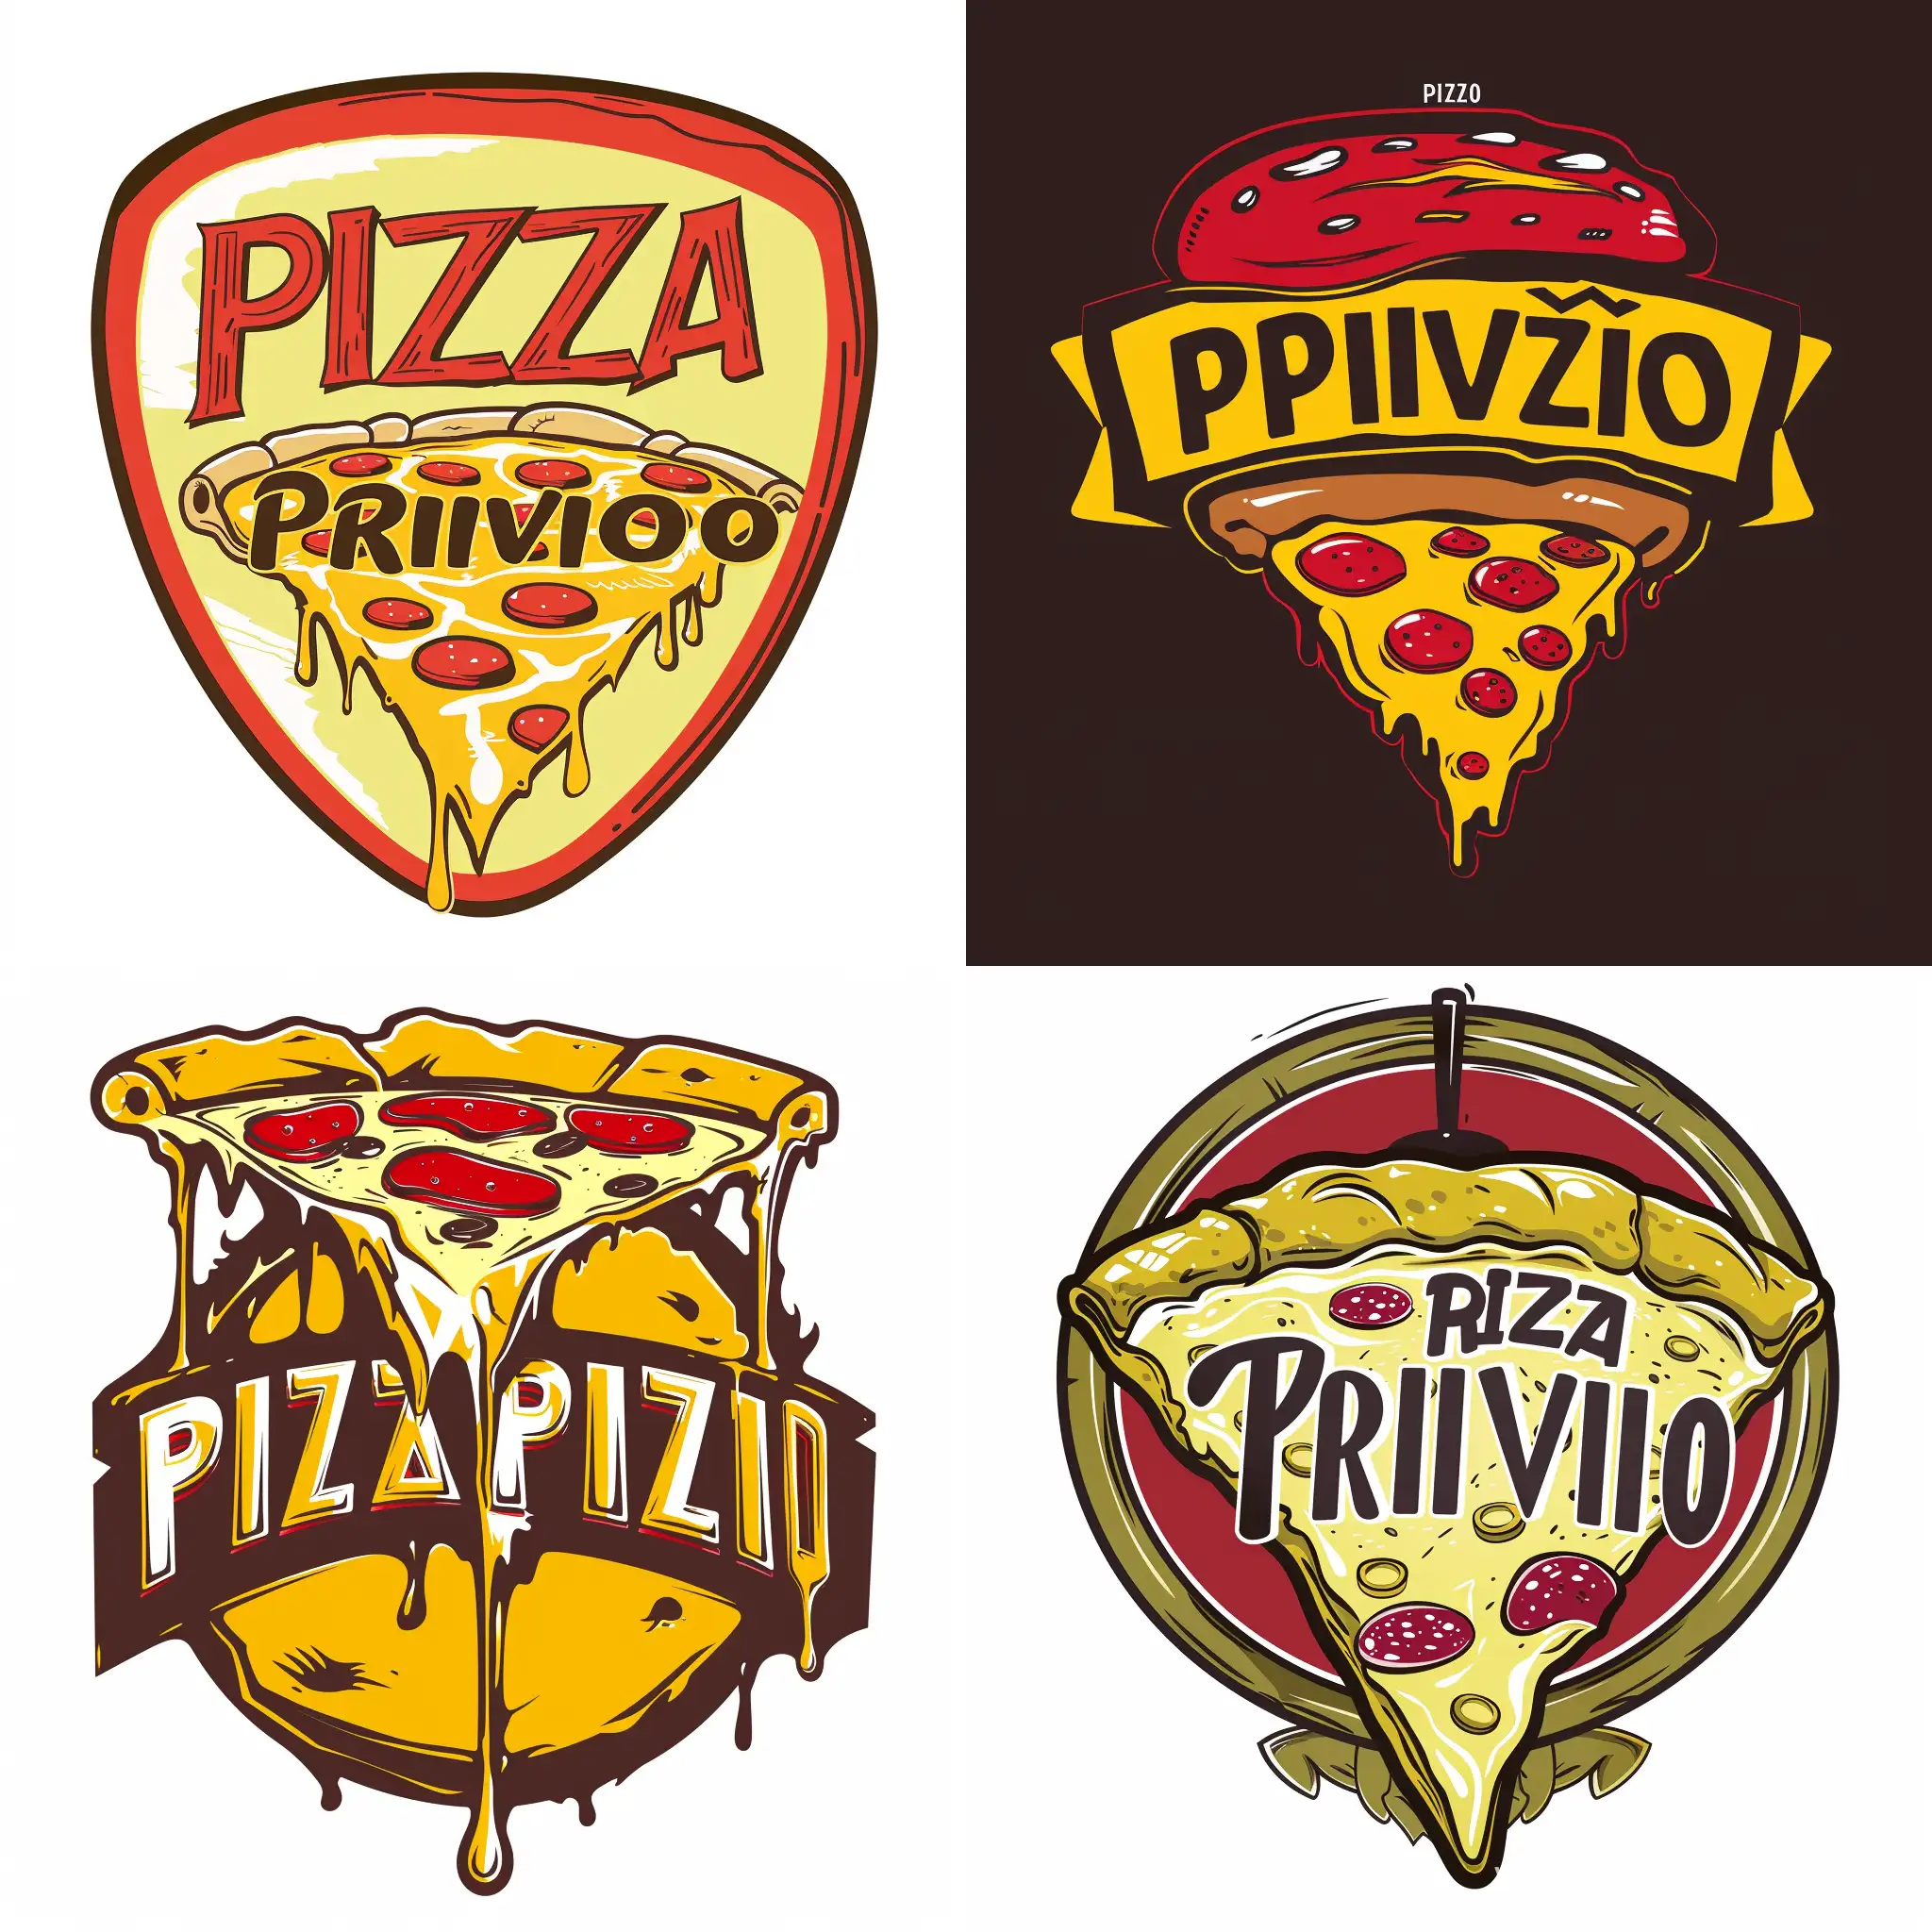 Pizza Logo For Restaurant Called "Pizza Privio"